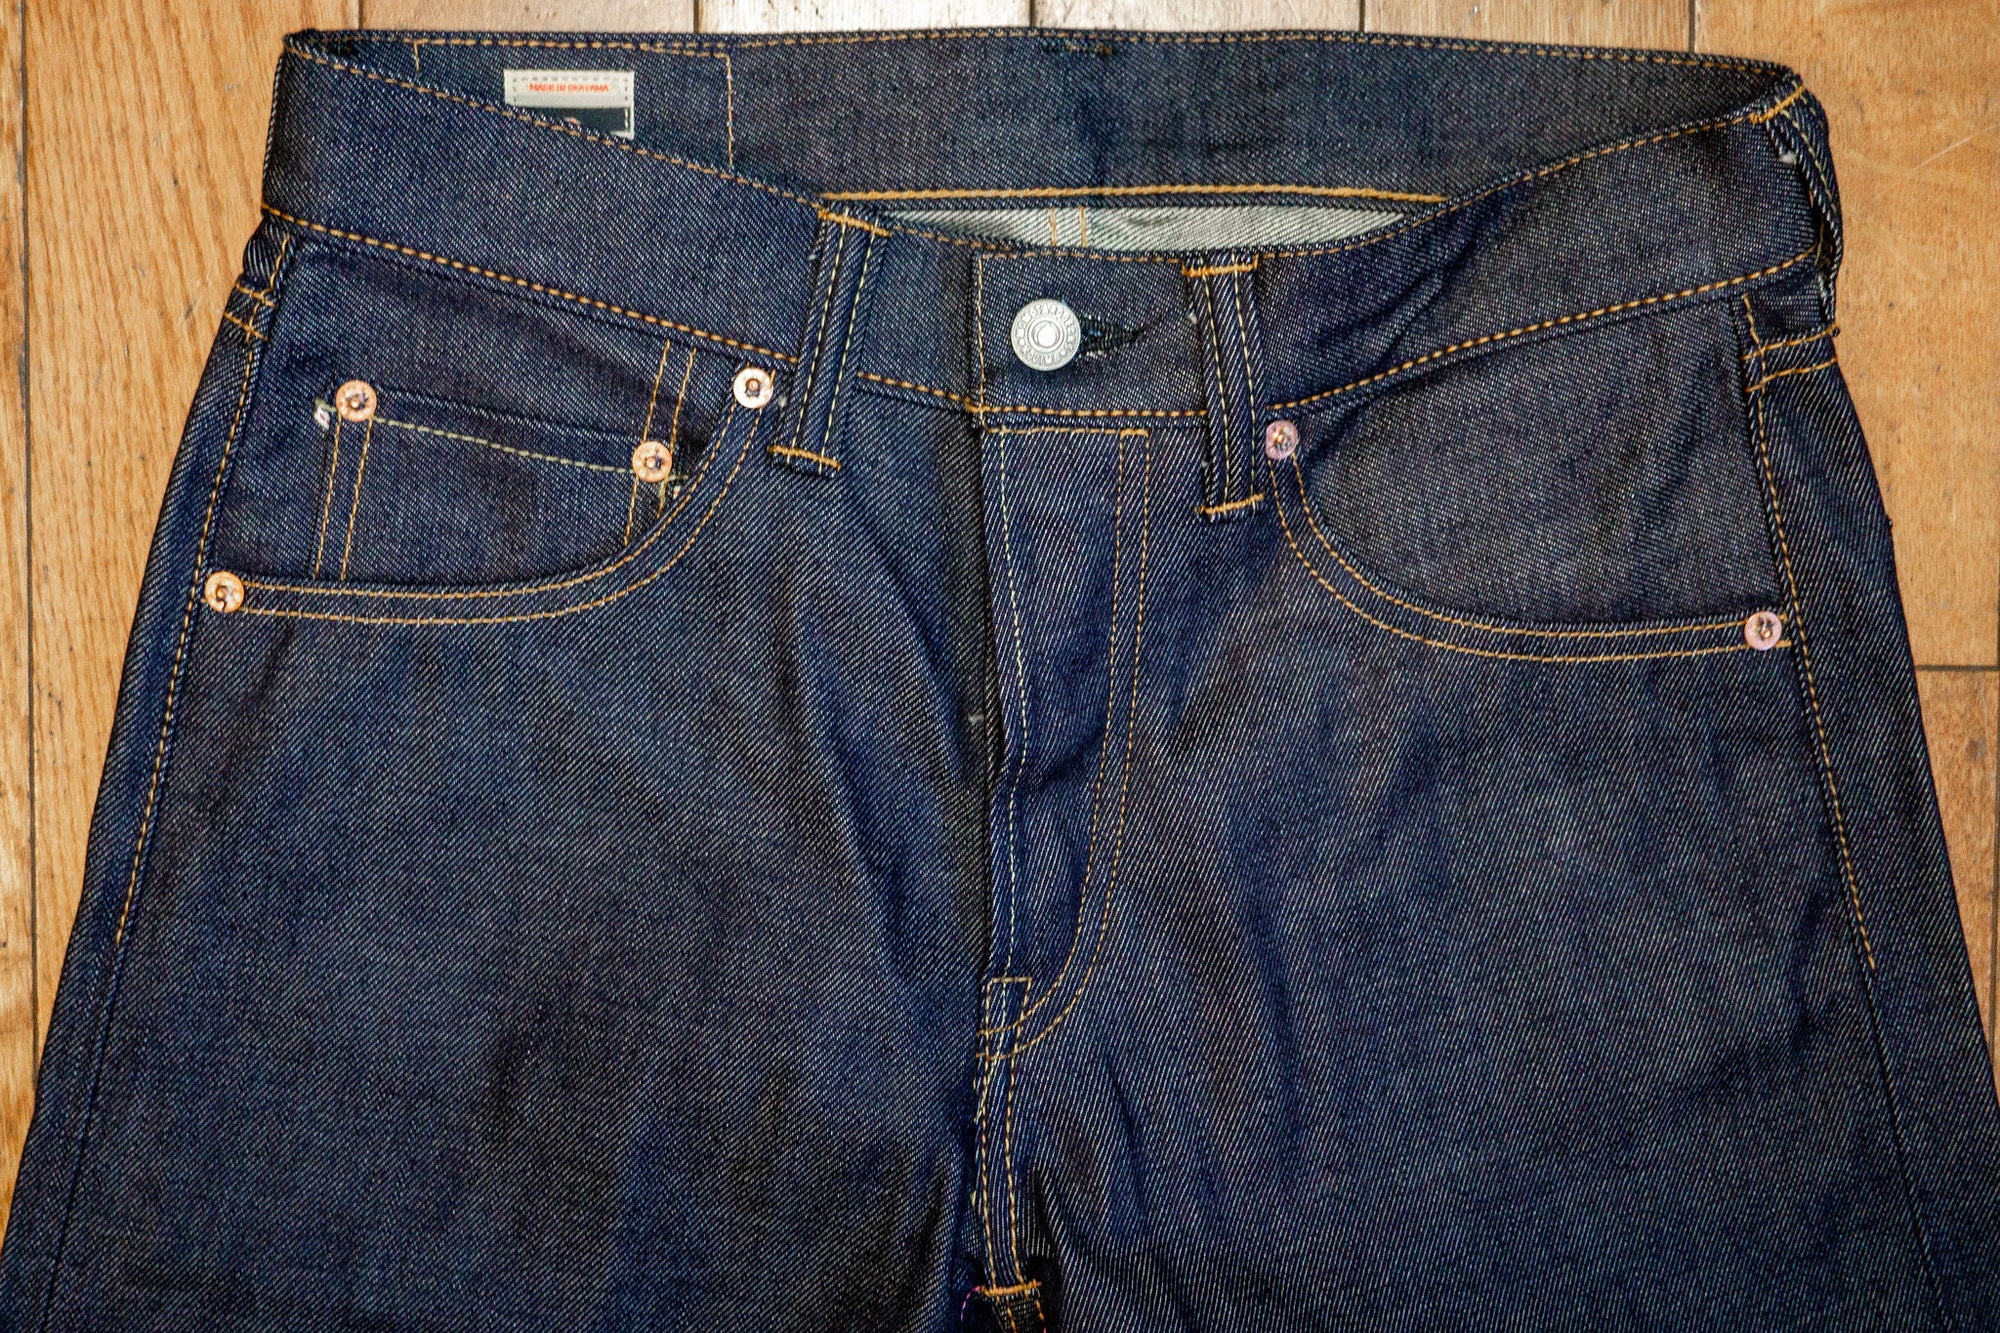 0605-13 13oz Tight Tapered Jeans - Momotaro